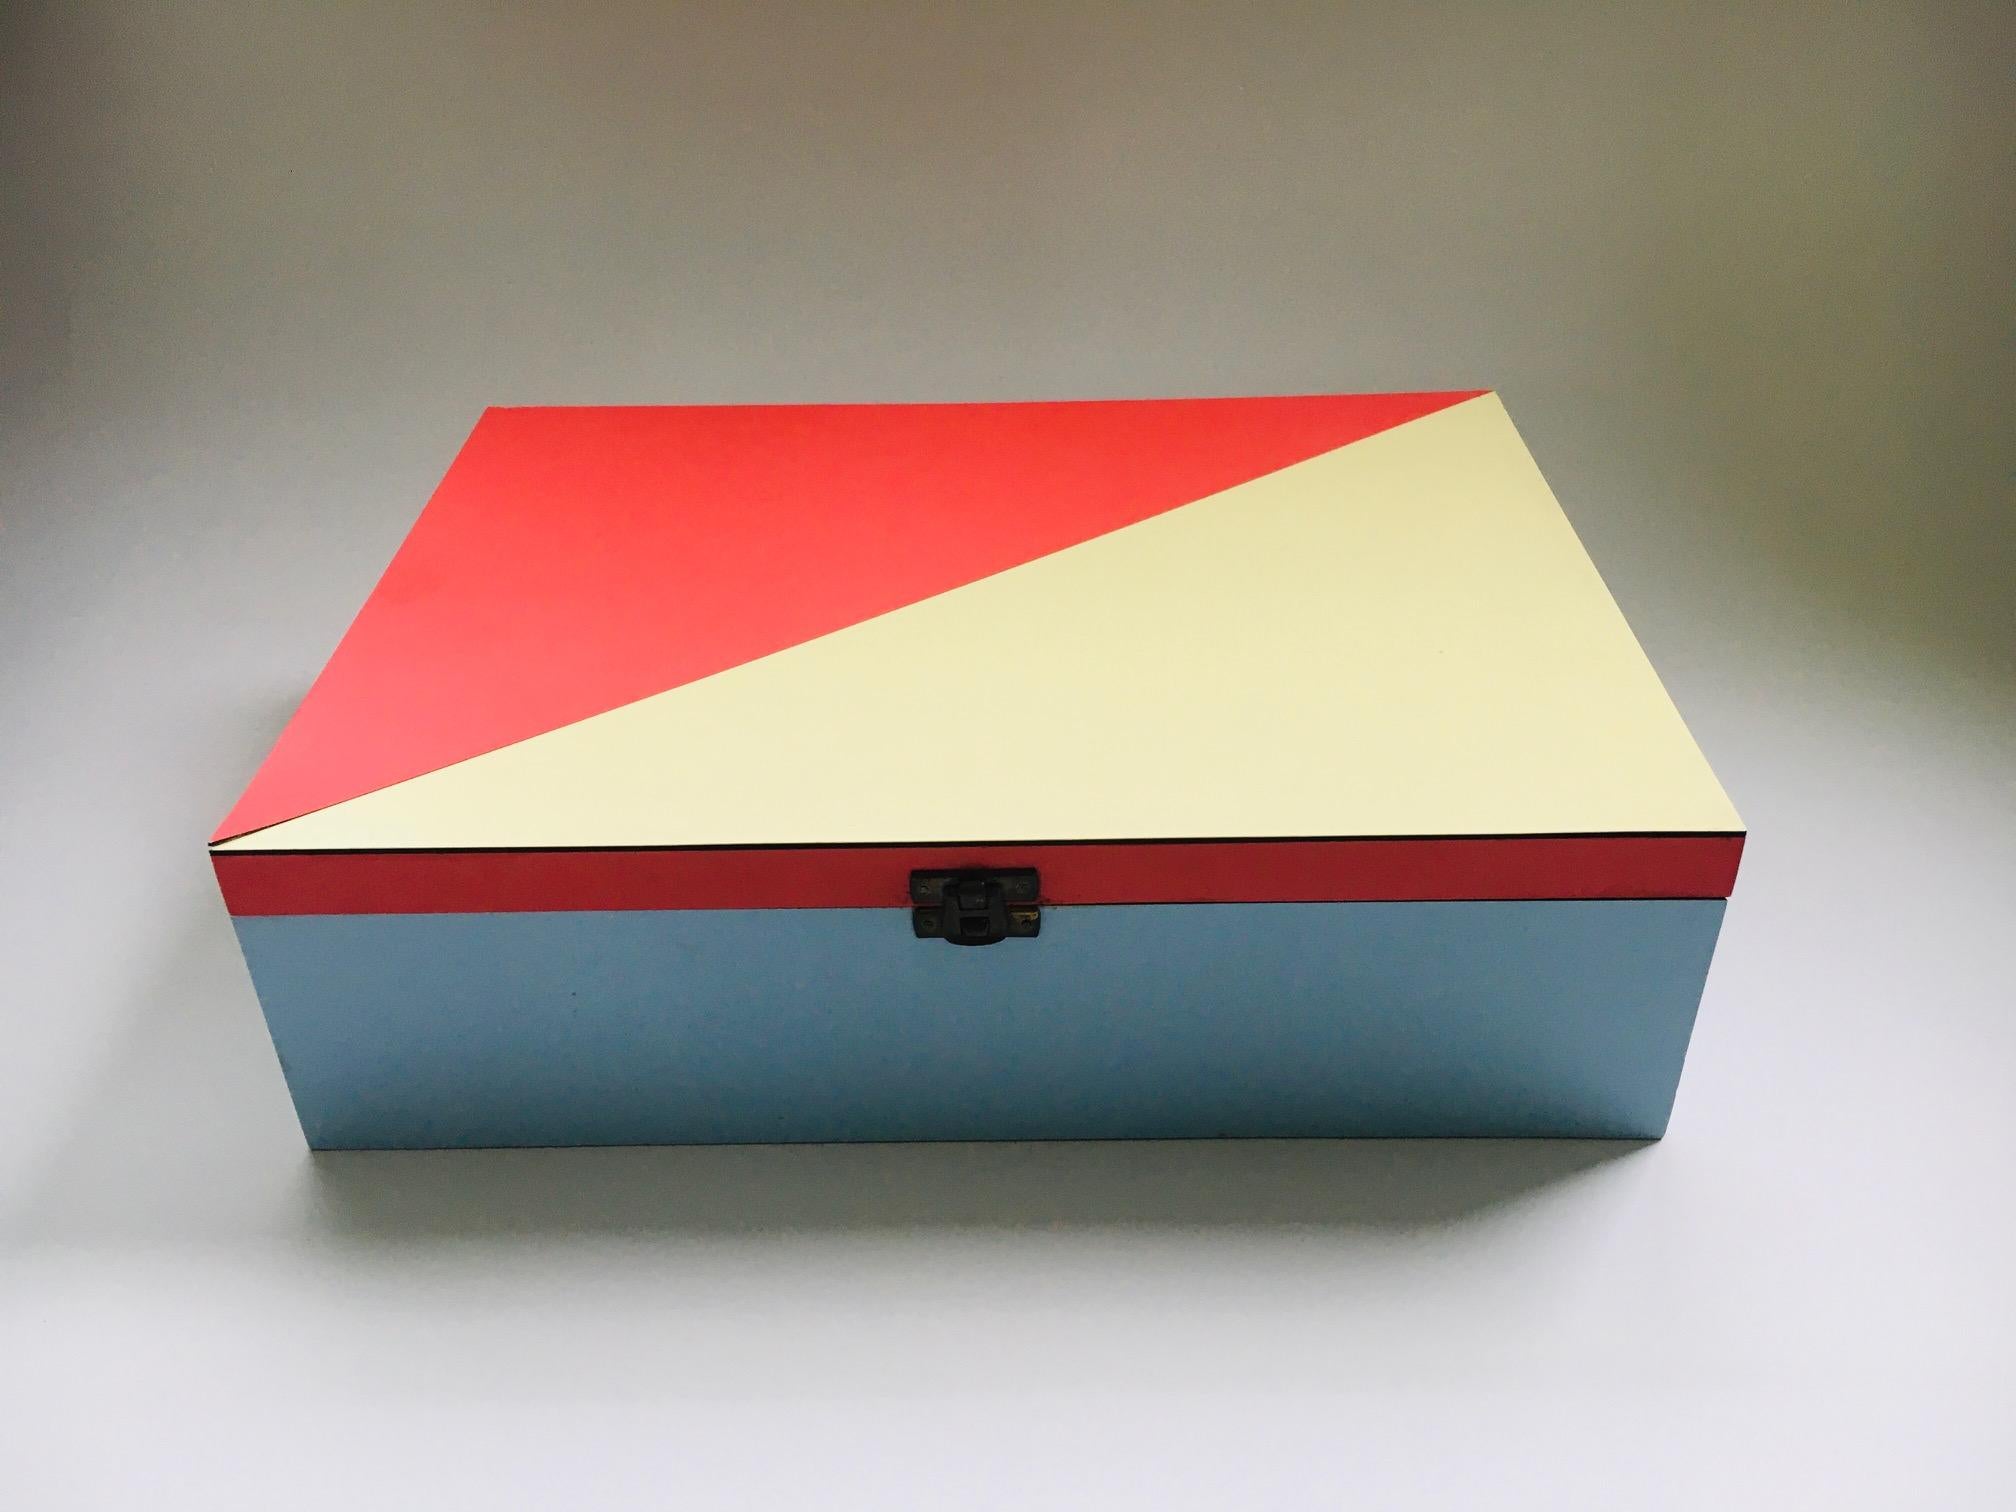 Mid-Century Modern Midcentury Modern Dutch Design STIJL Modernism Letter Box, 1950's Holland For Sale